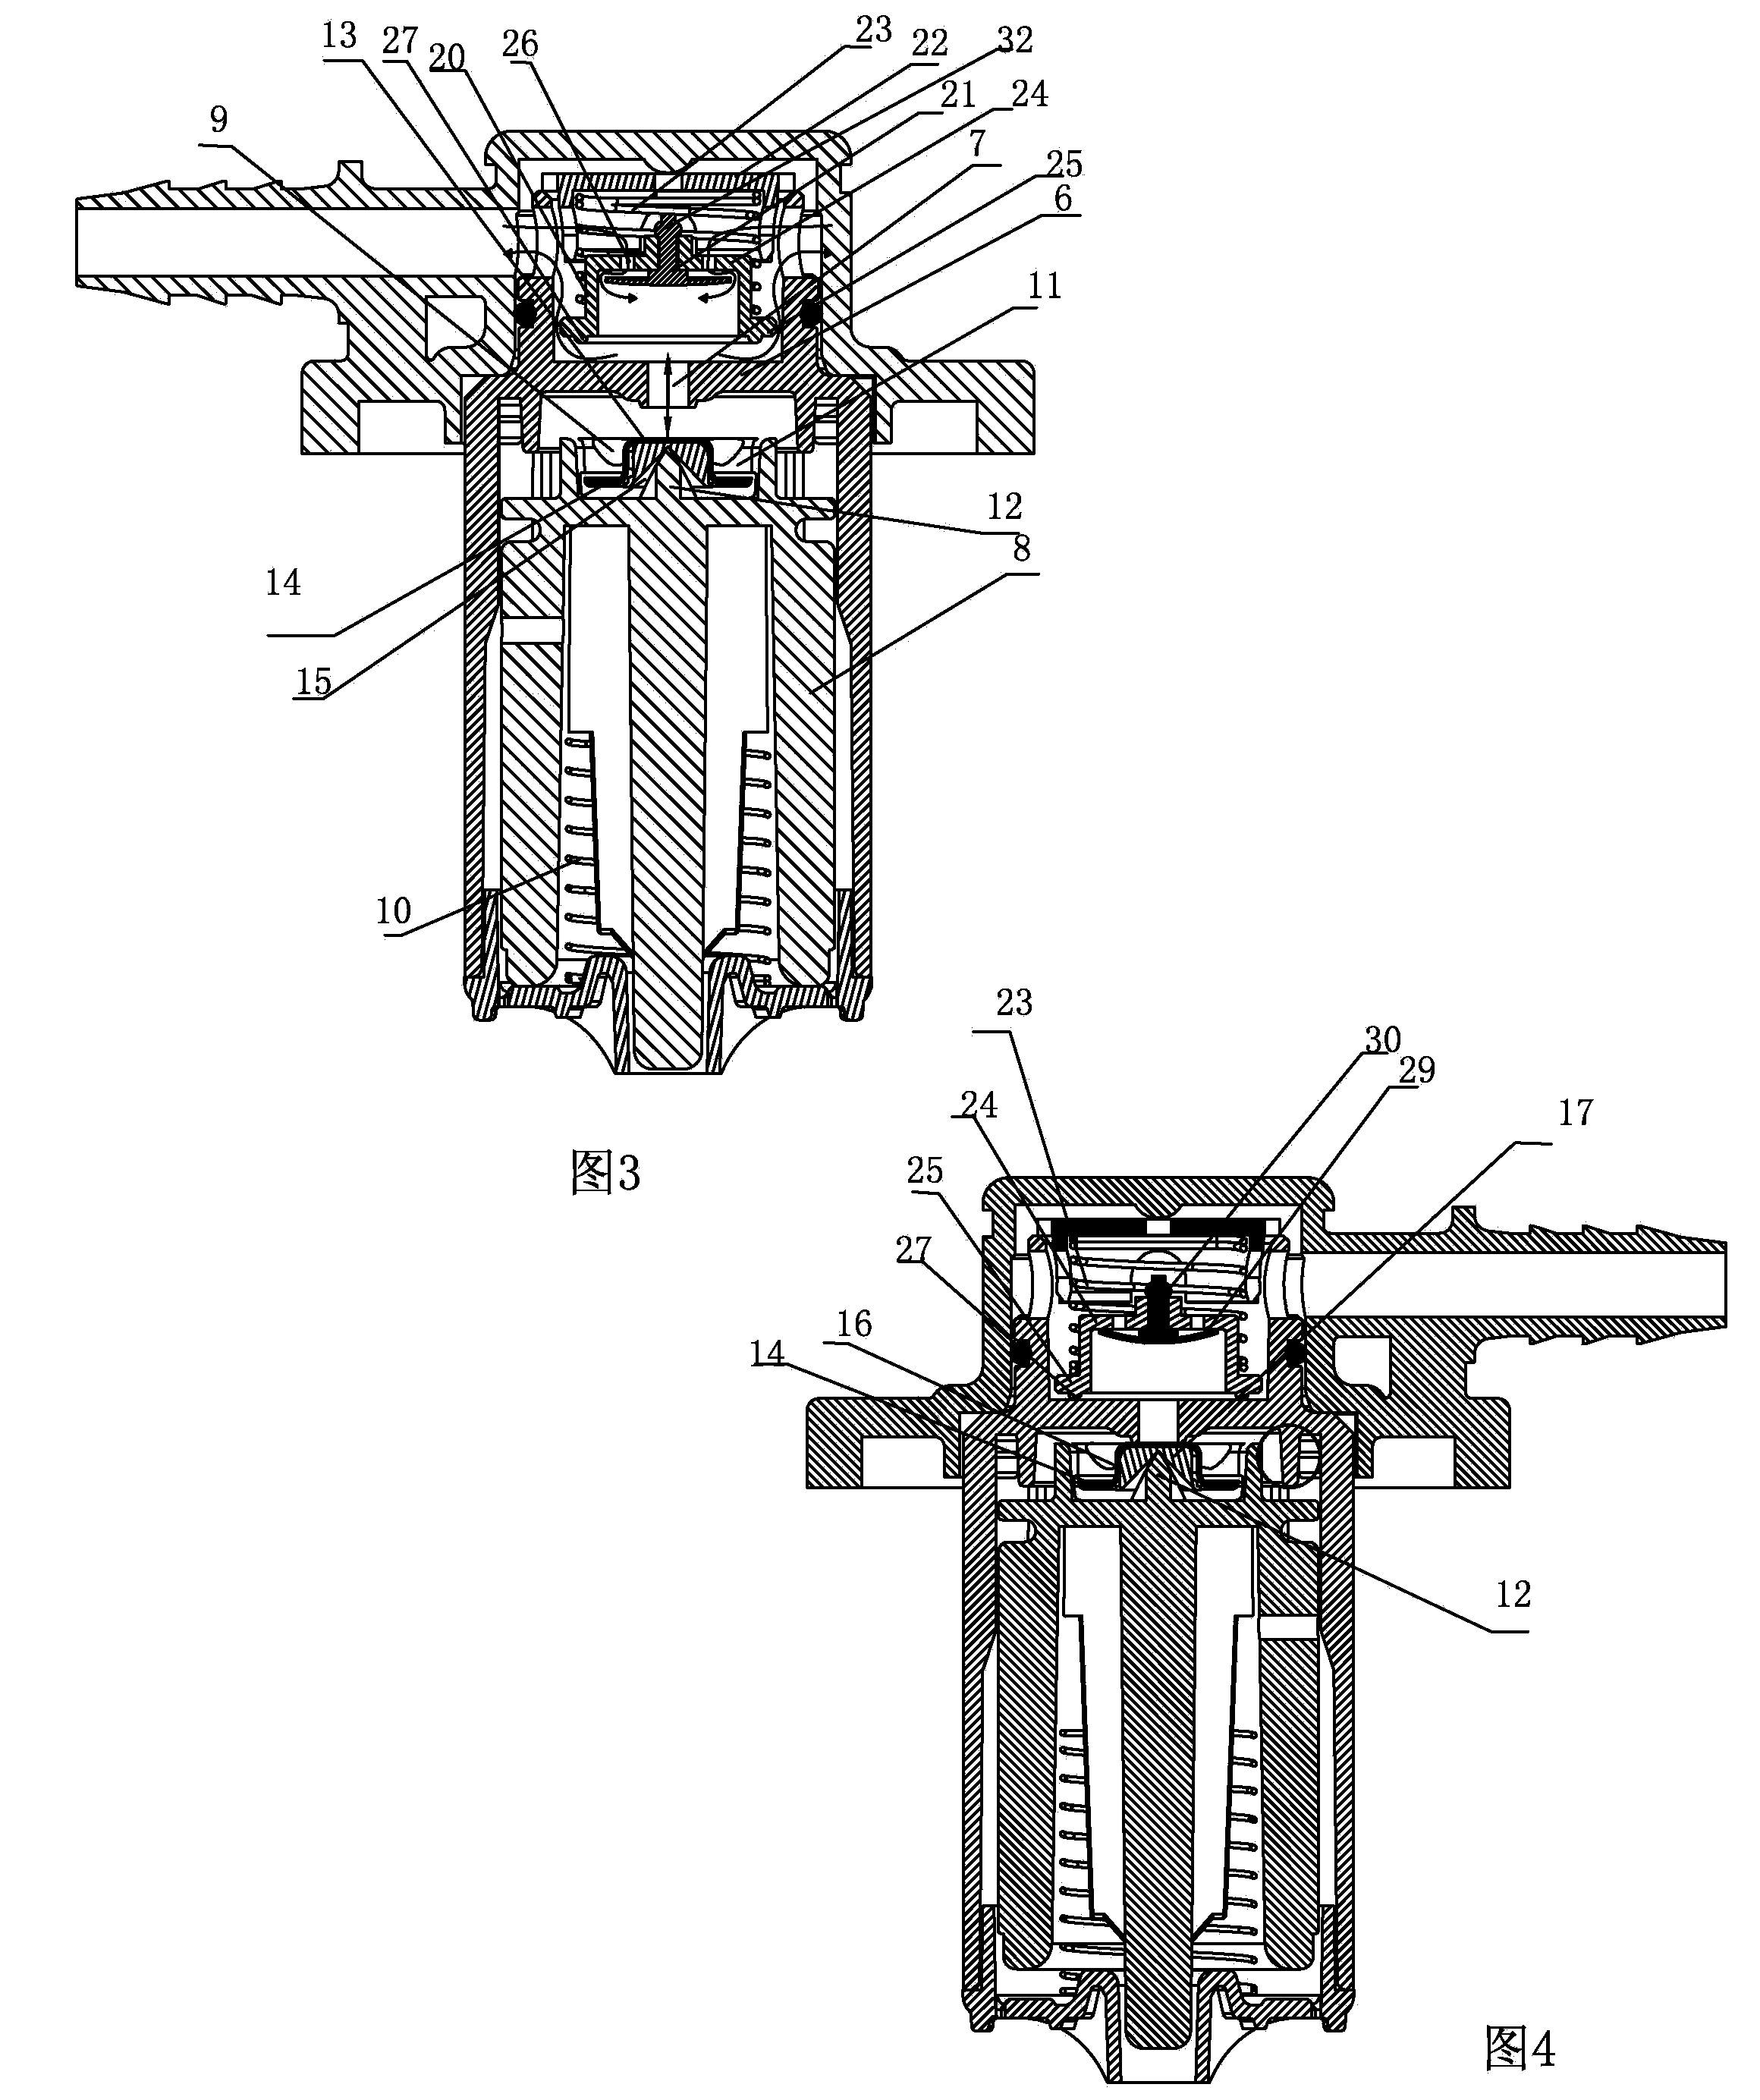 Overflow cut-off valve